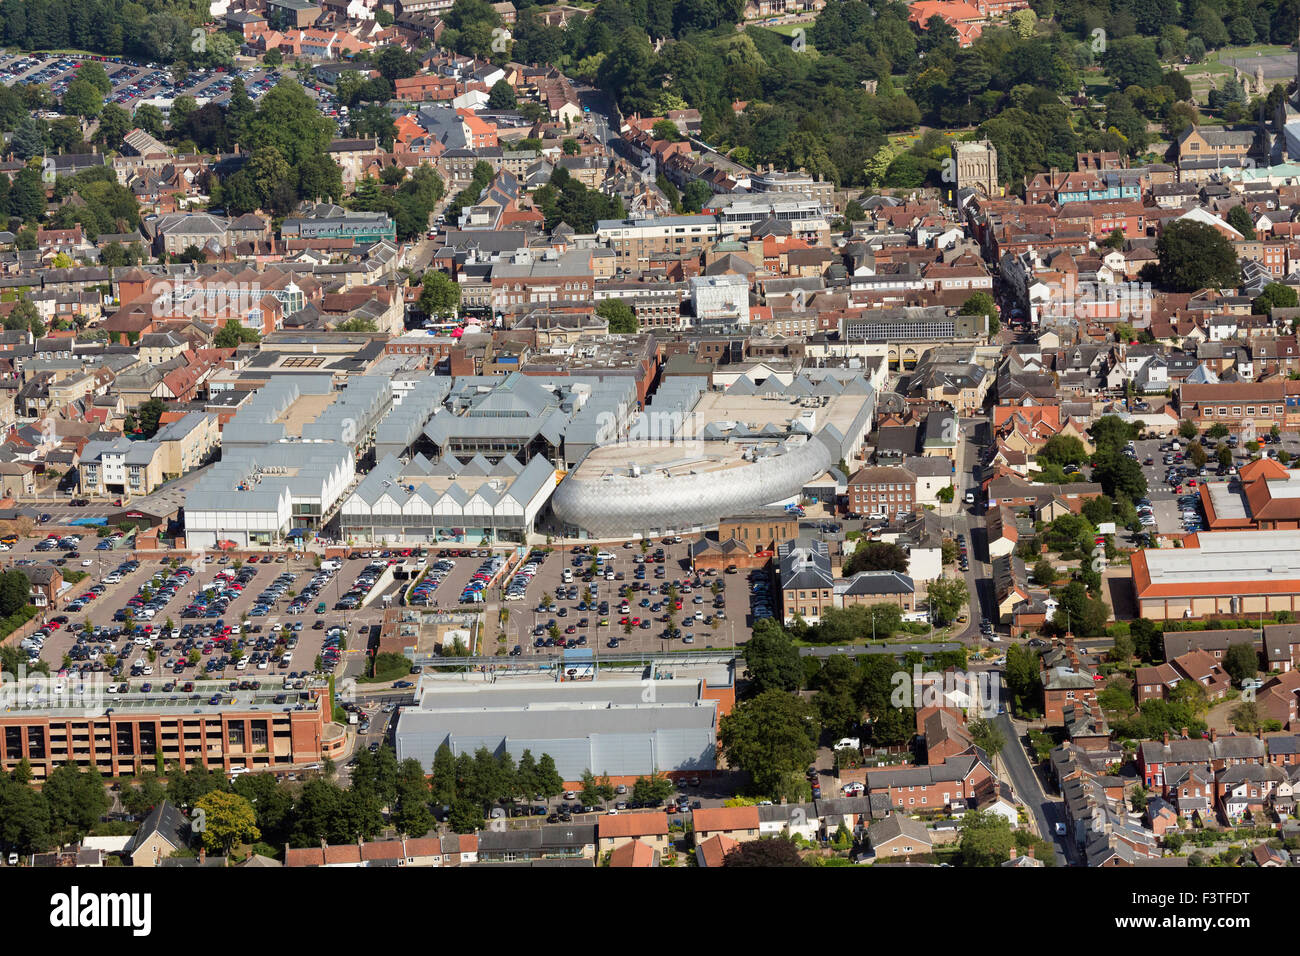 Bury St Edmunds town centre, Arc Shopping Centre and car park, aerial photo, UK Stock Photo